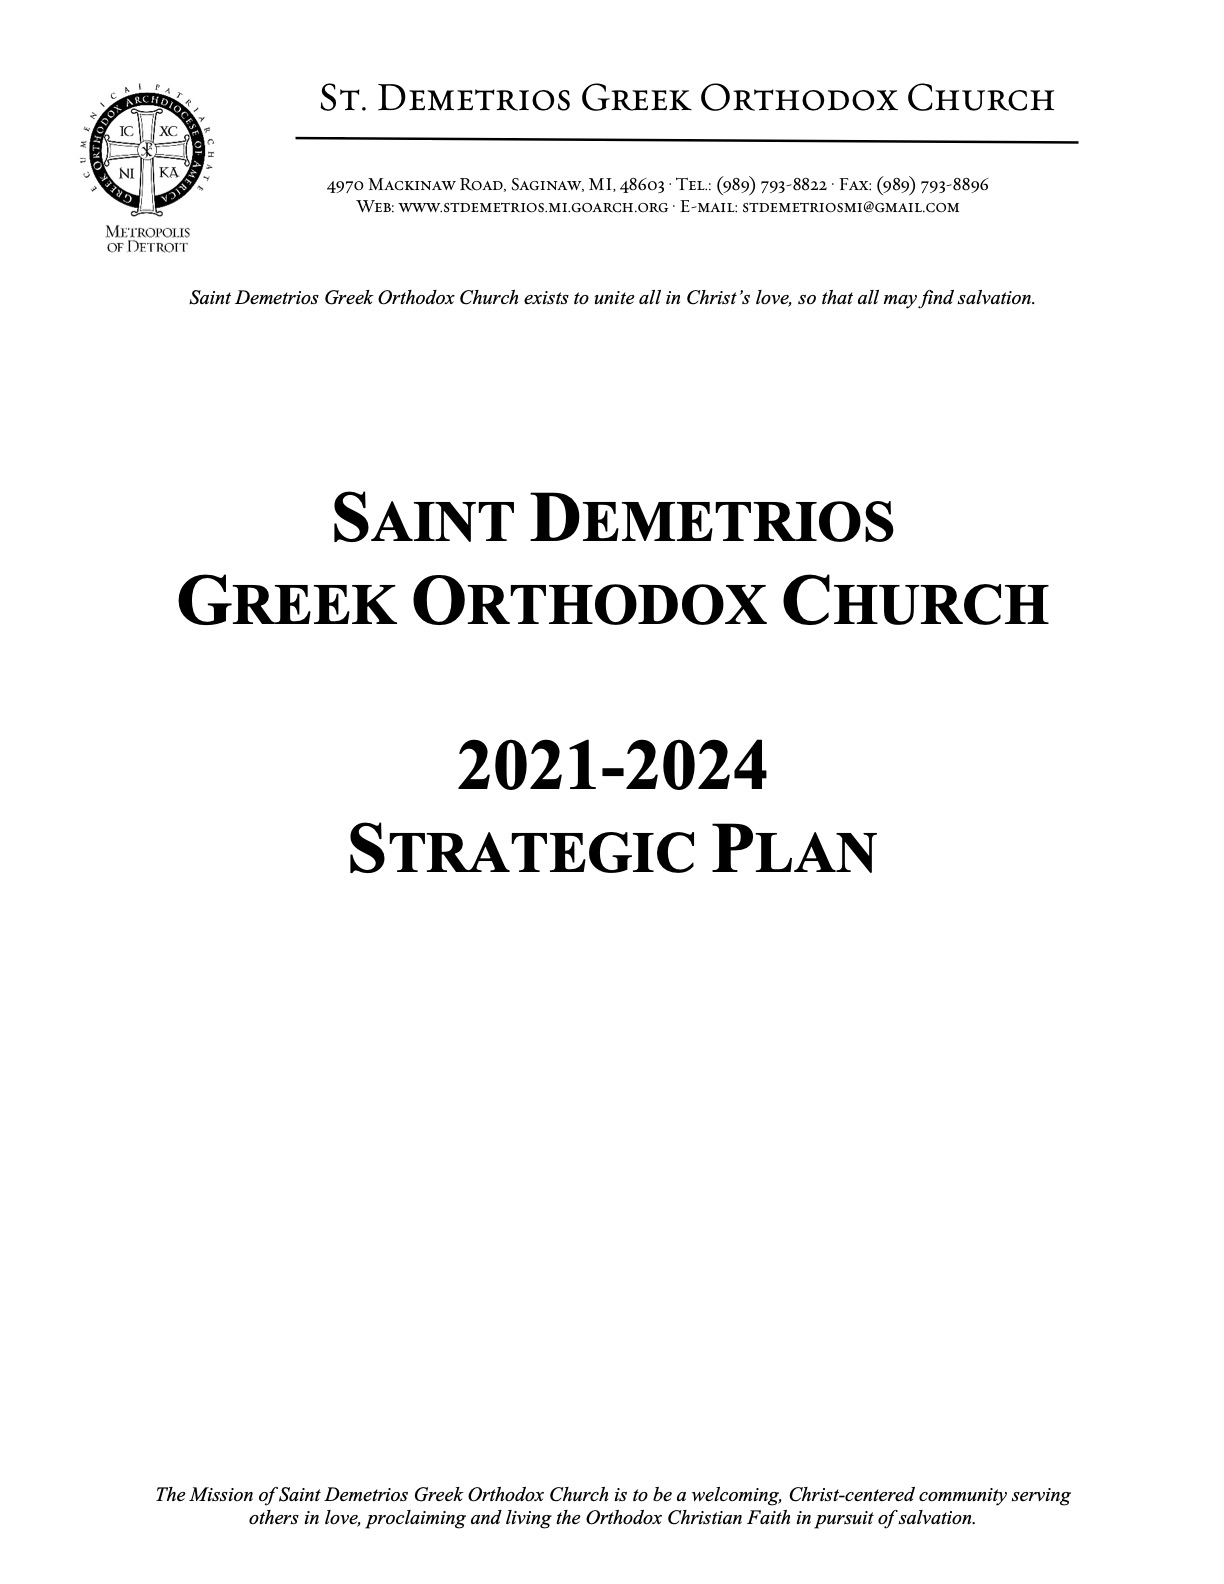 Strategic Plan Book